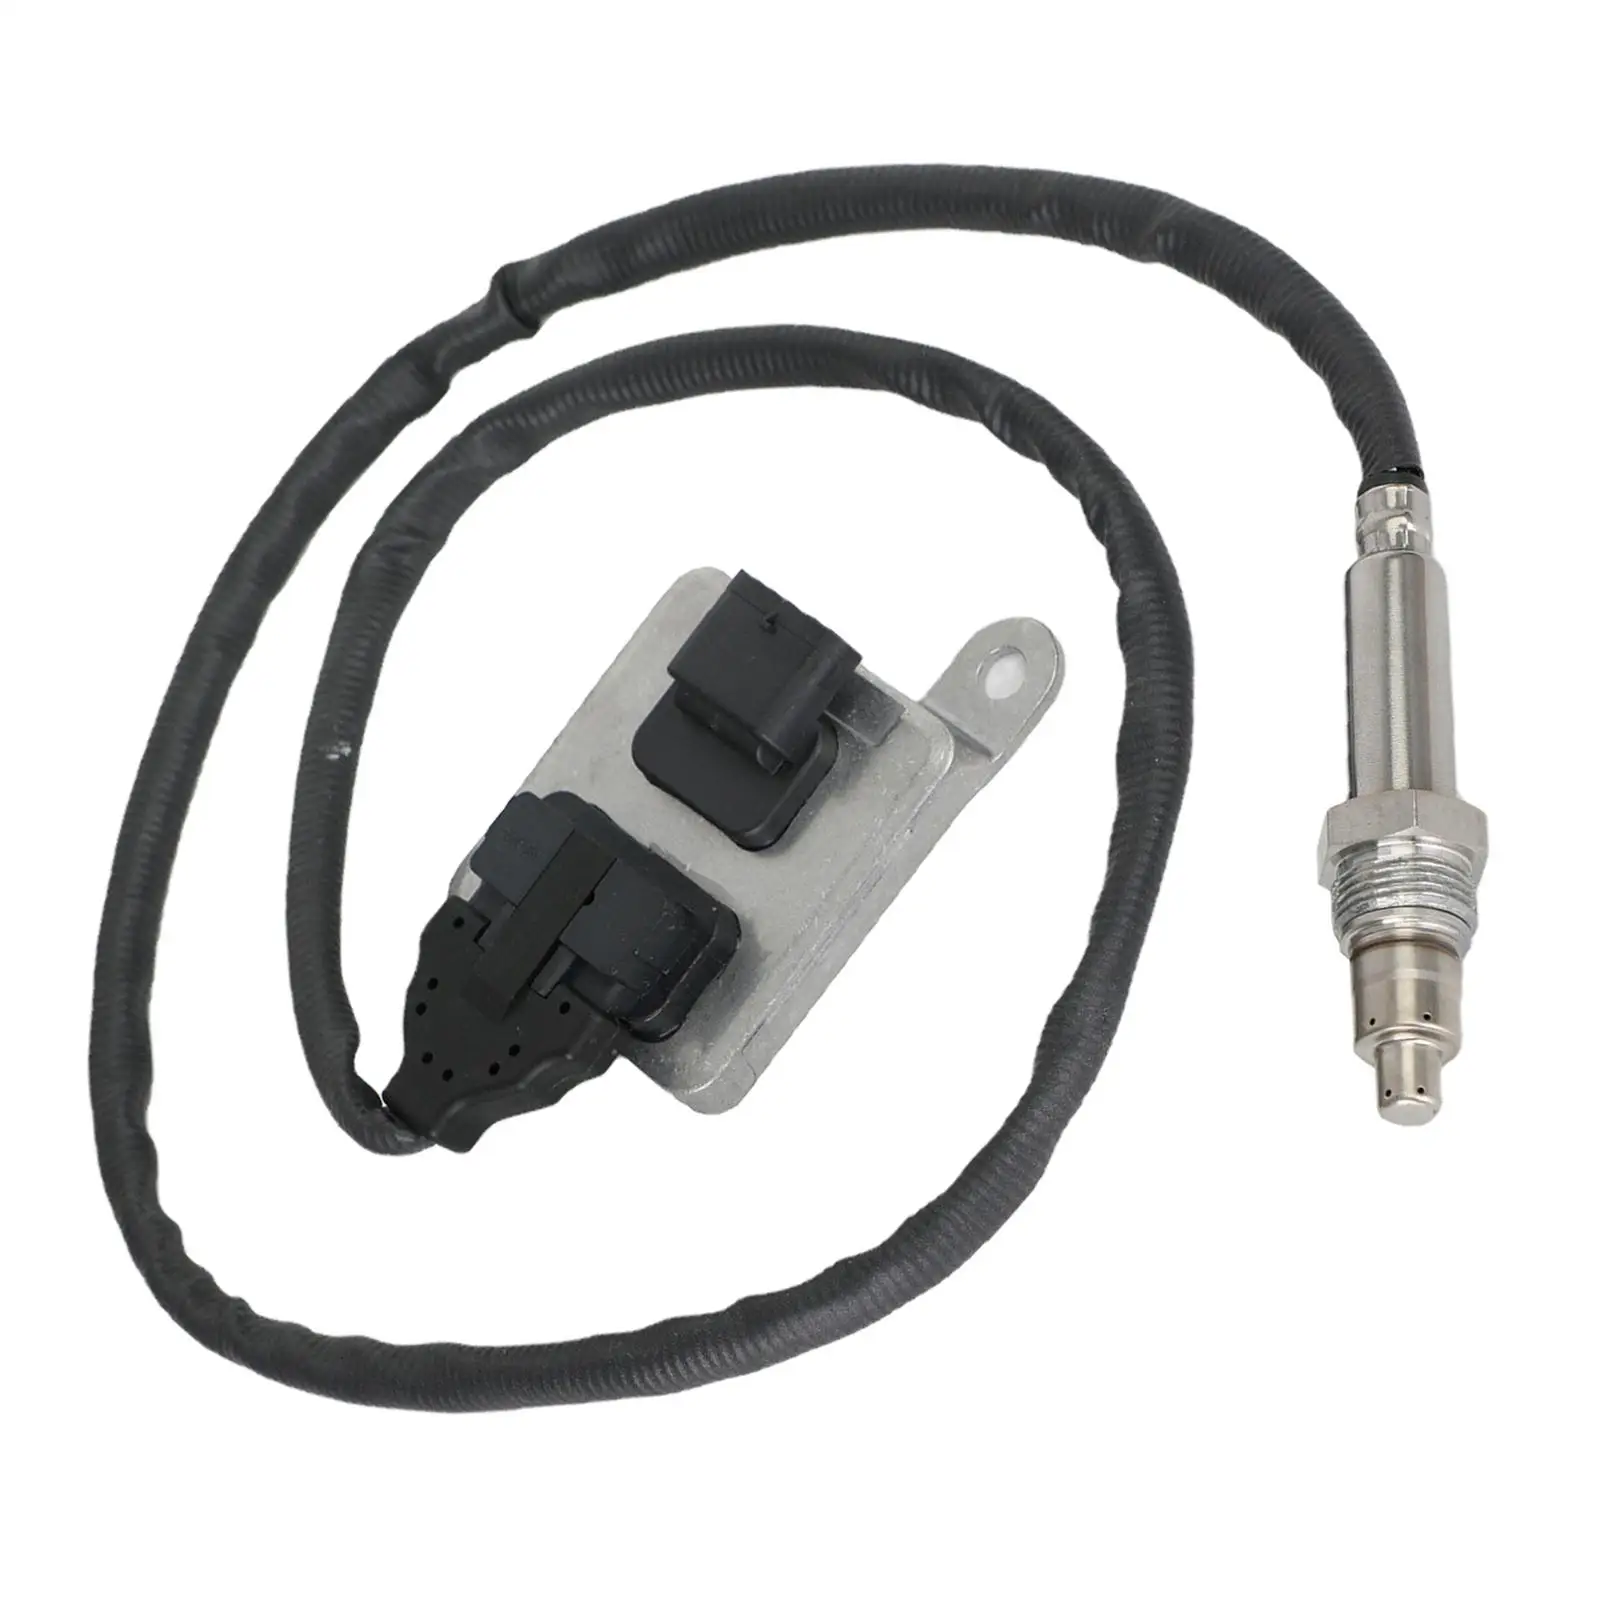 Nox Sensor Nitrogen Oxygen Sensor Accessories for Isuzu 89823-13911